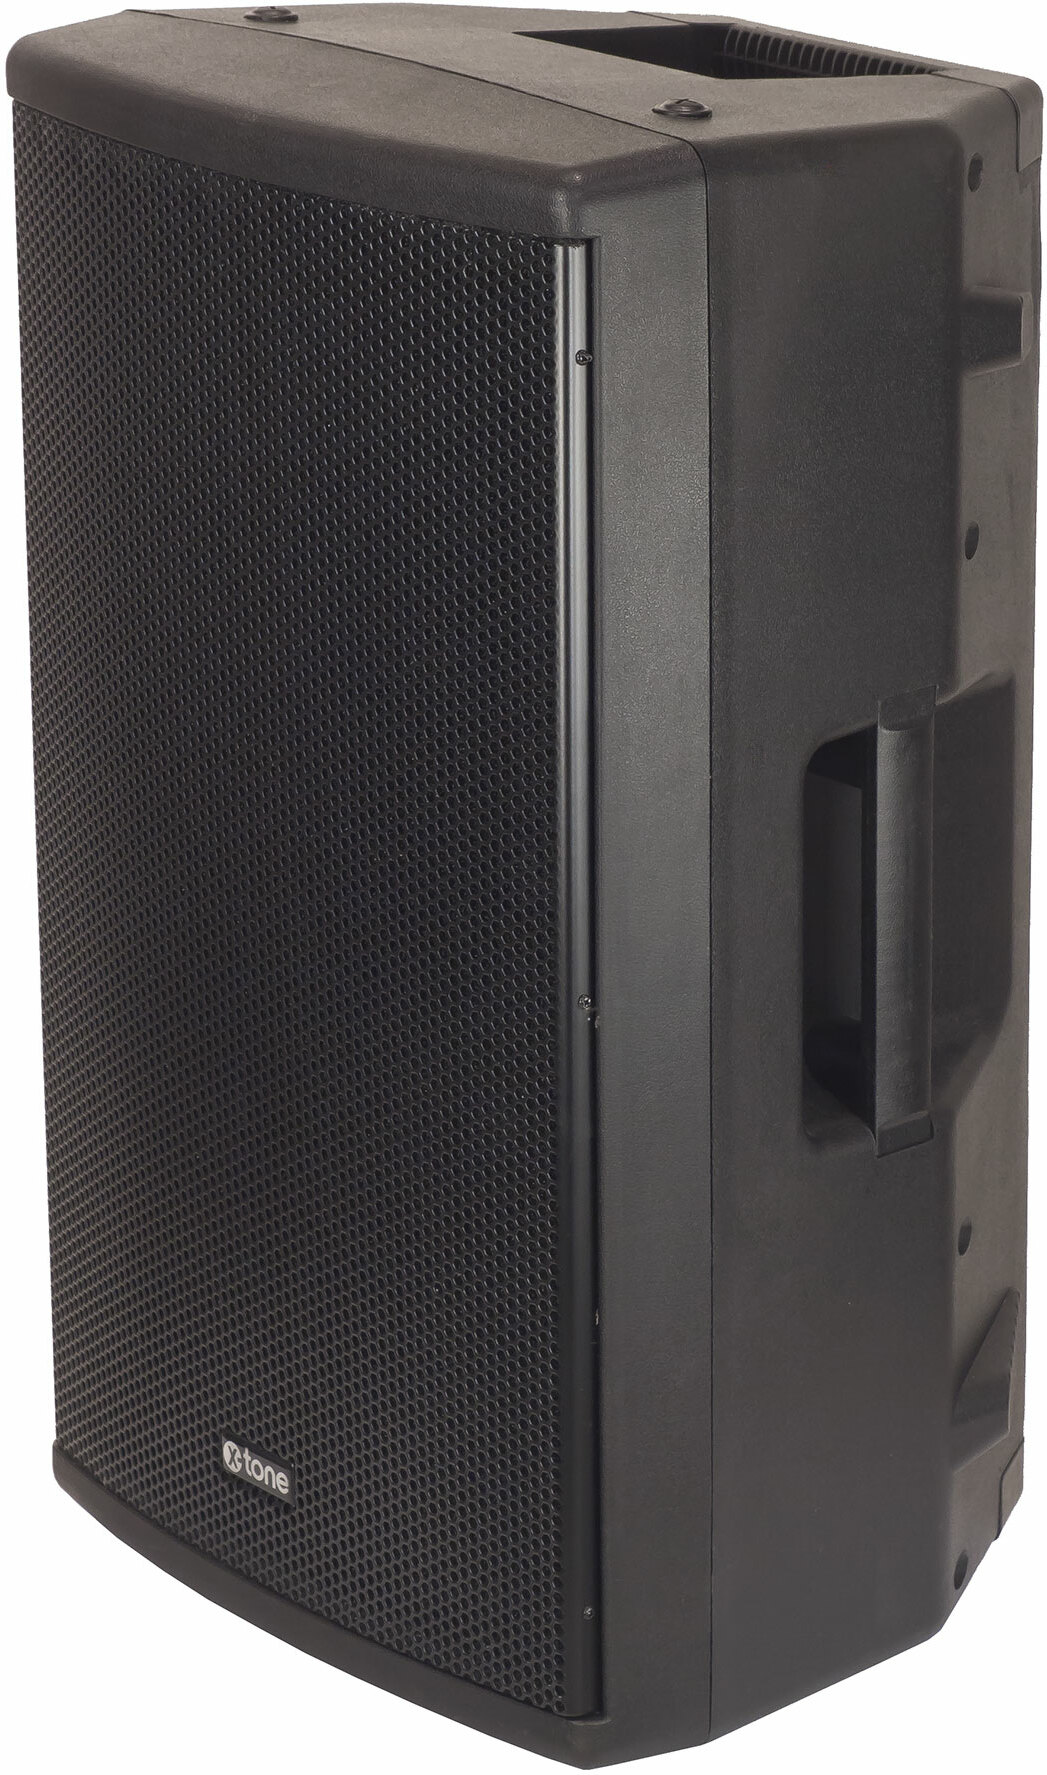 X-tone Xts-15 - Active full-range speaker - Main picture